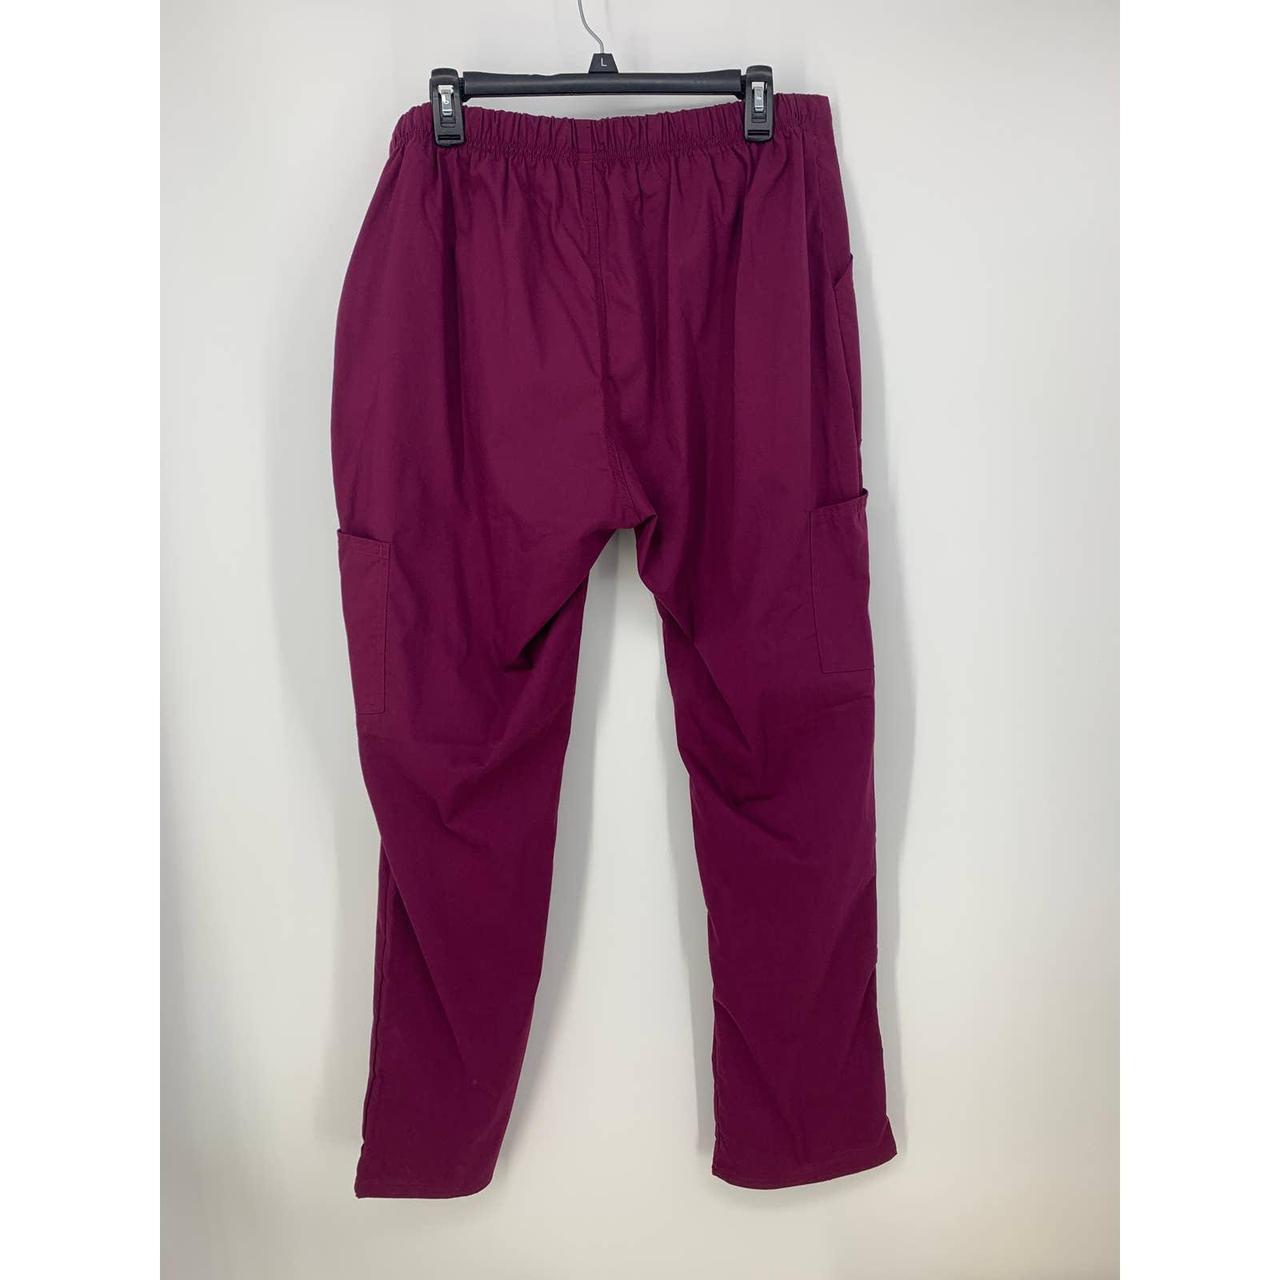 Scrubstar Purple Athletic Pants for Women